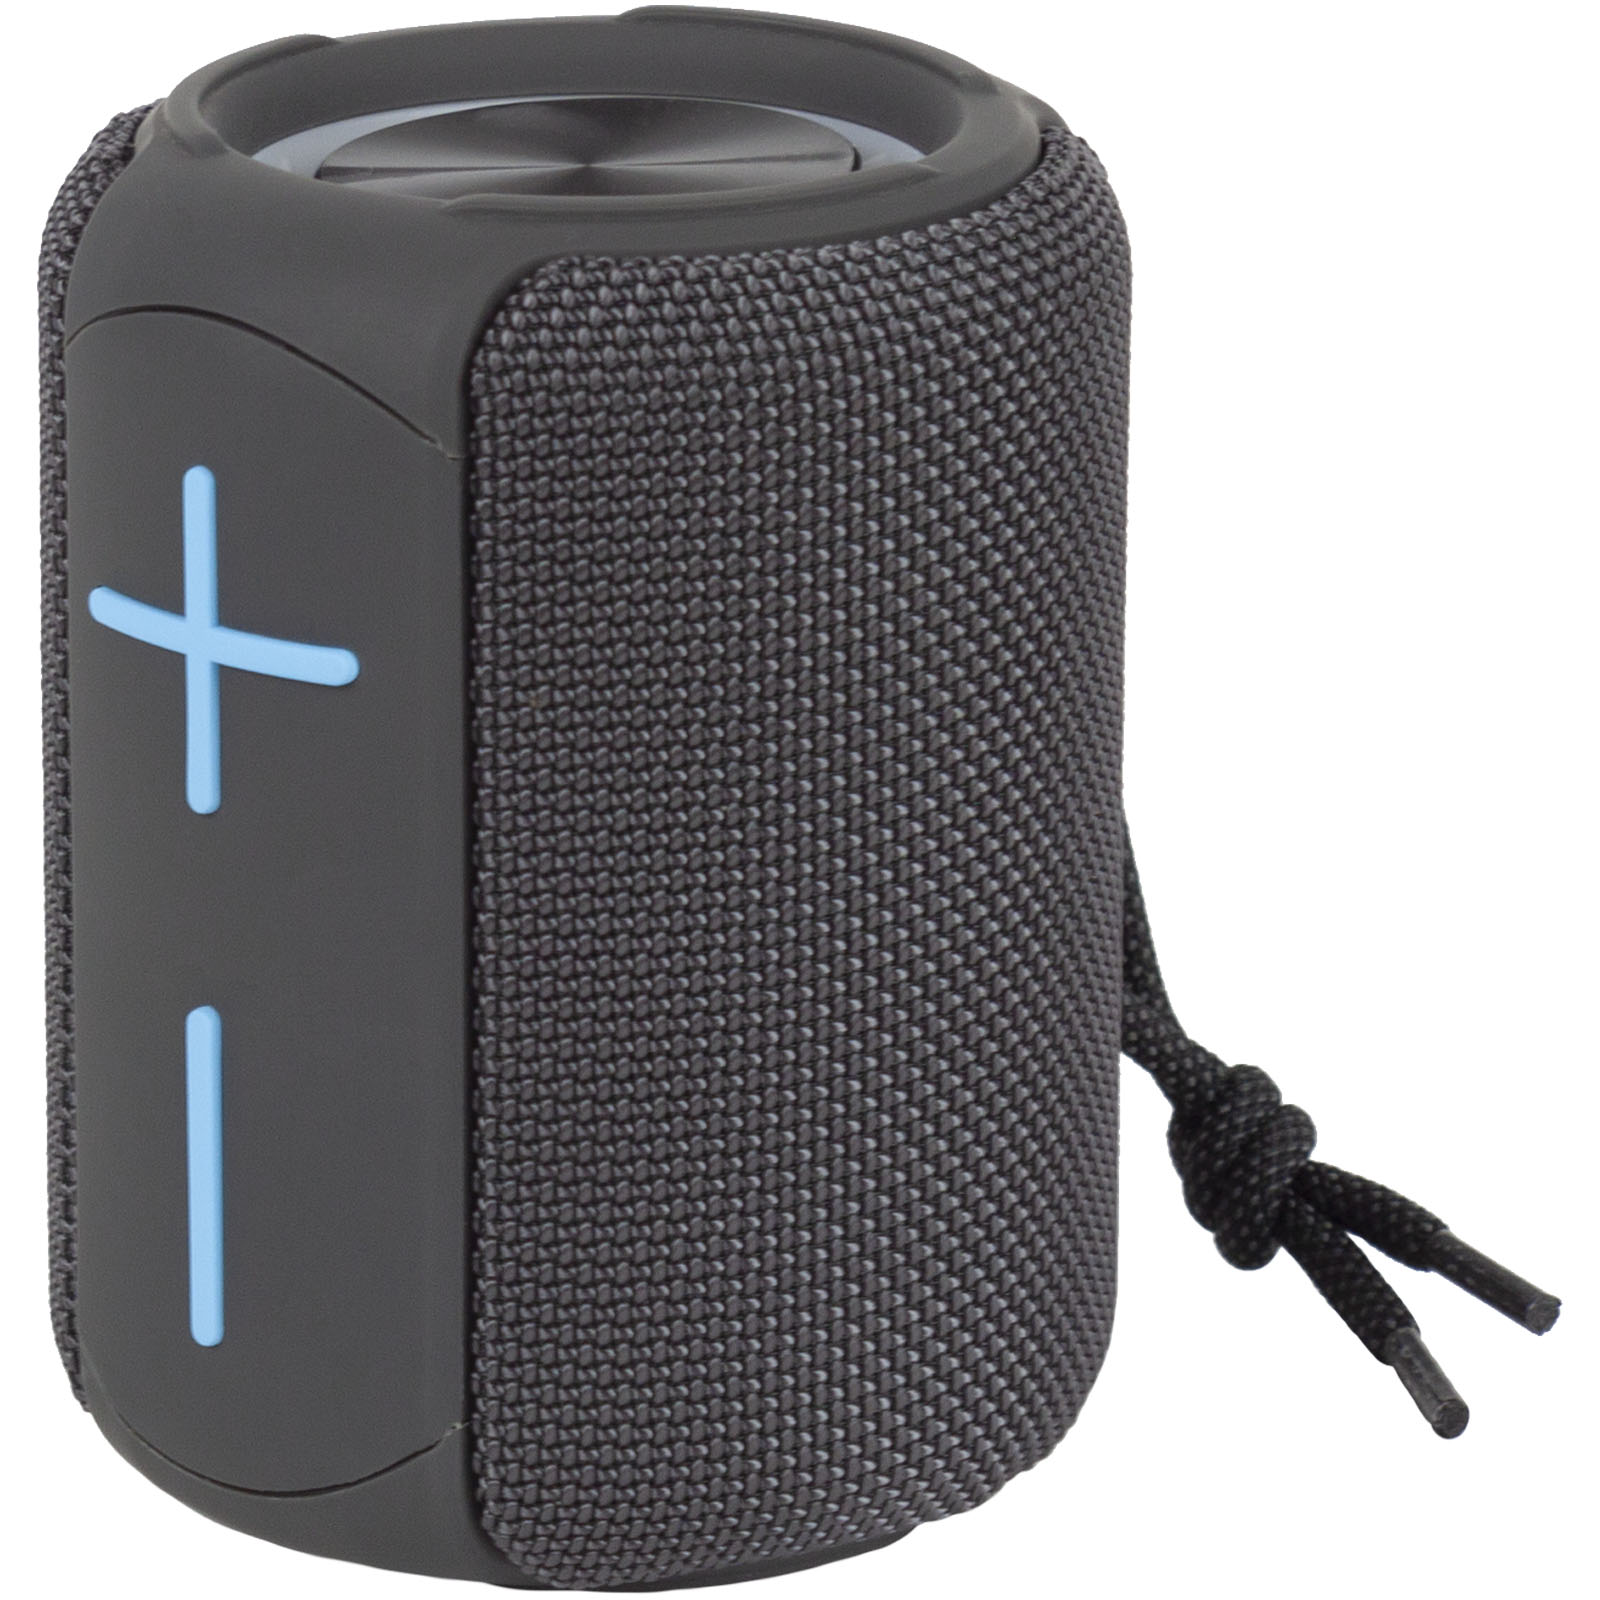 Haut-parleur Bluetooth BeatBox 6W - Voegtlinshoffen - Zaprinta Belgique